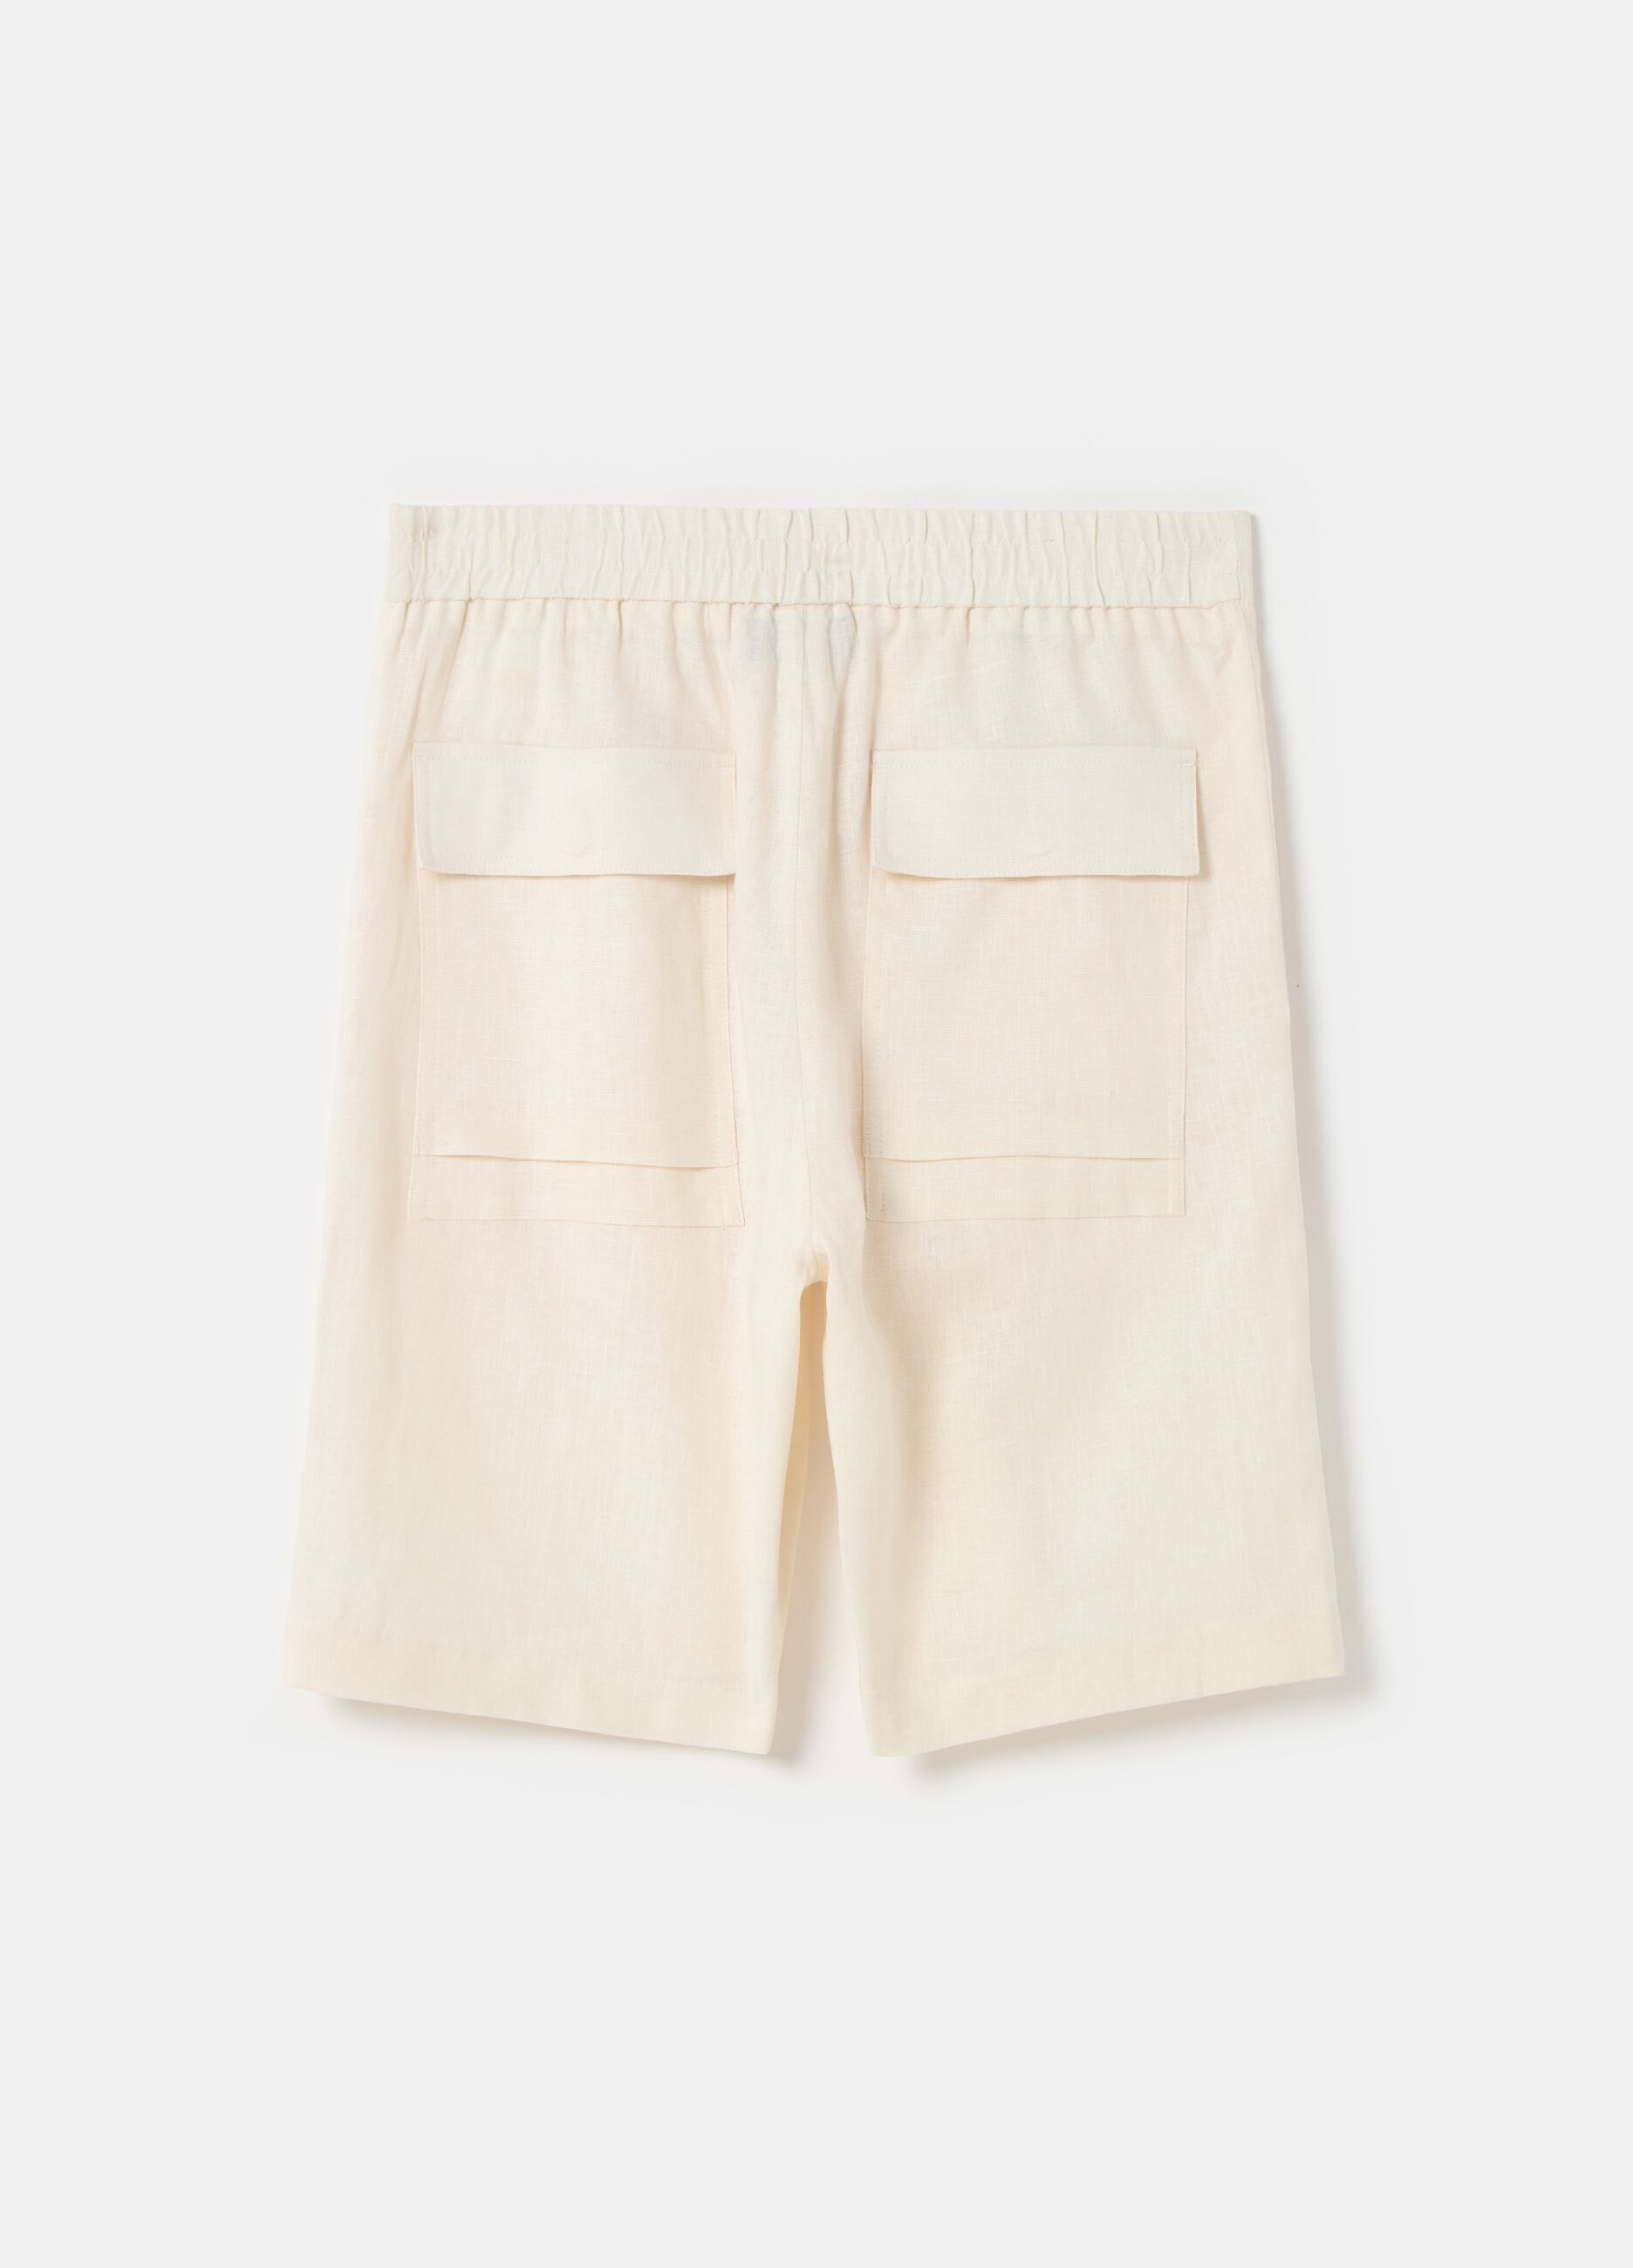 Contemporary Bermuda shorts in linen